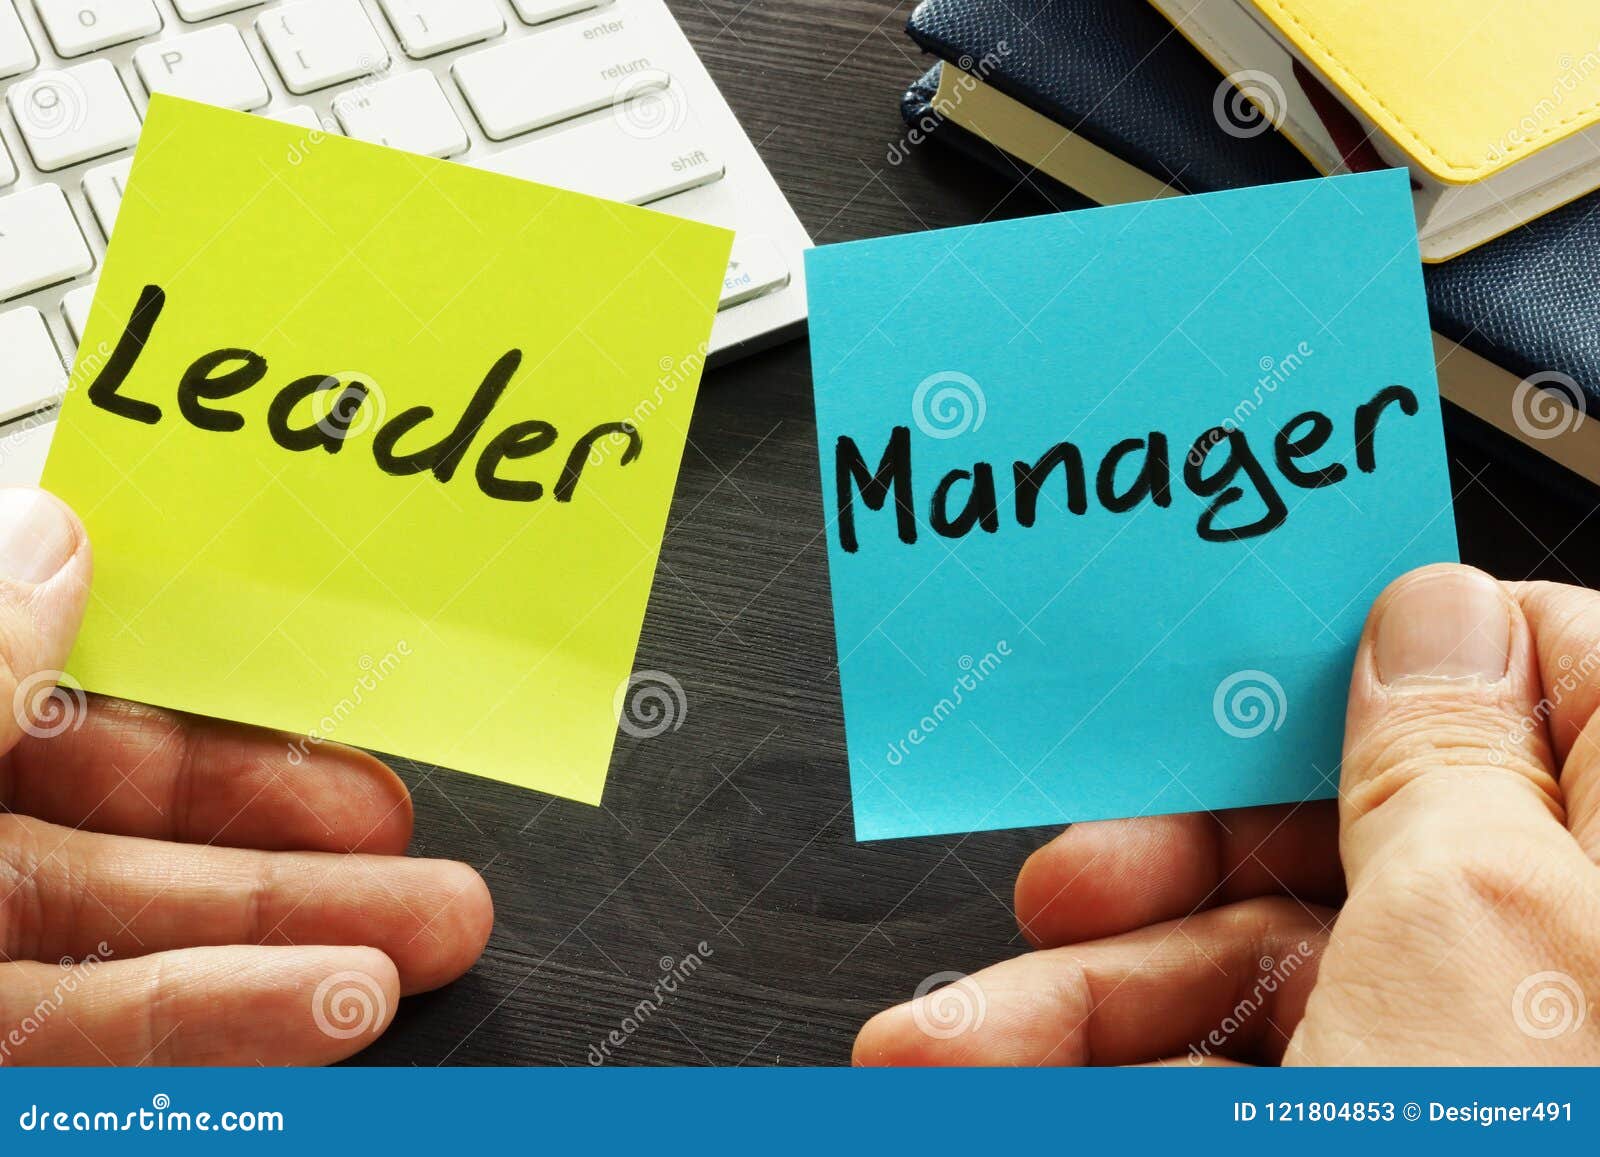 leader vs manager. man holding memo sticks.